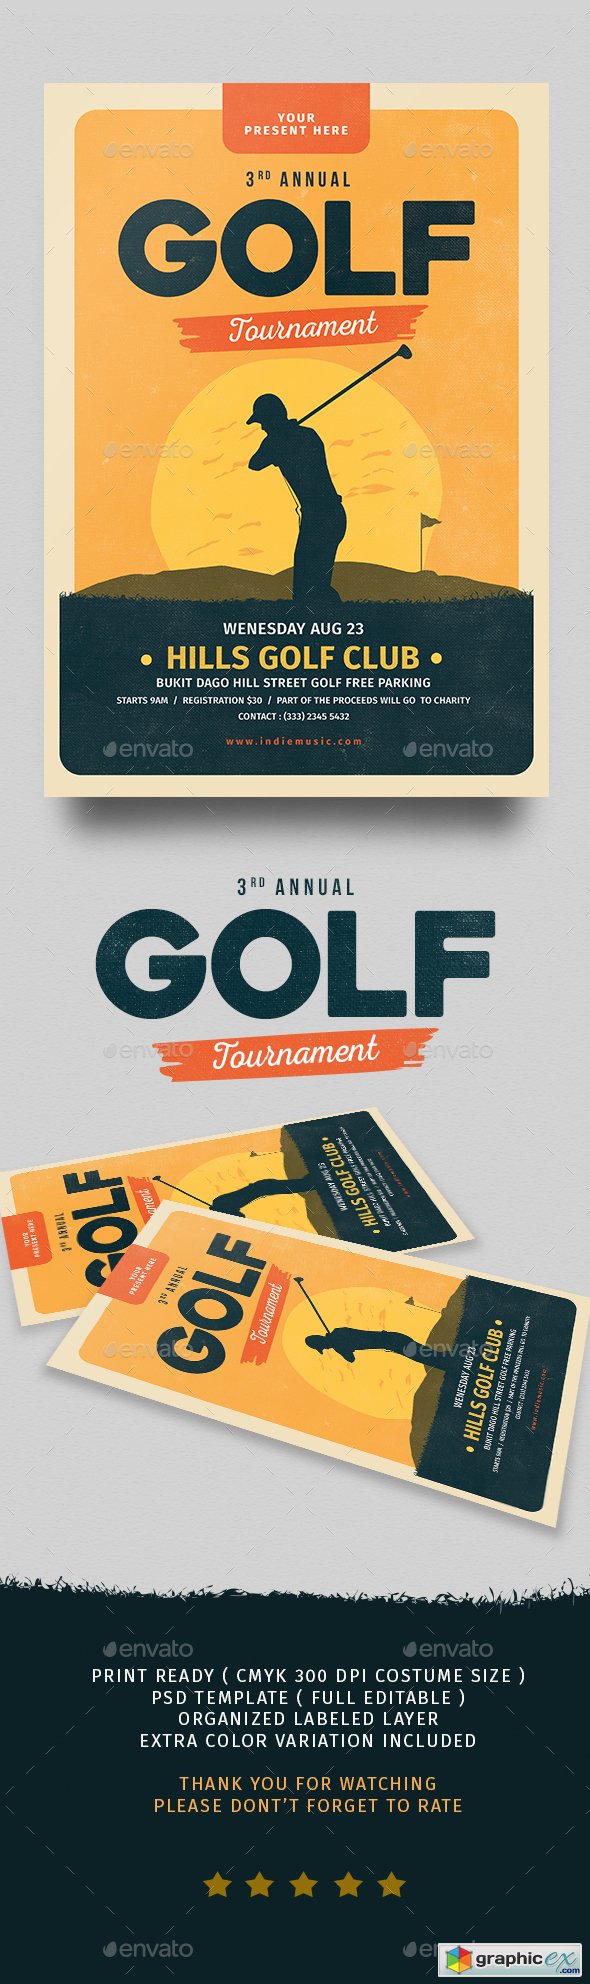 Golf Turnament Flyer